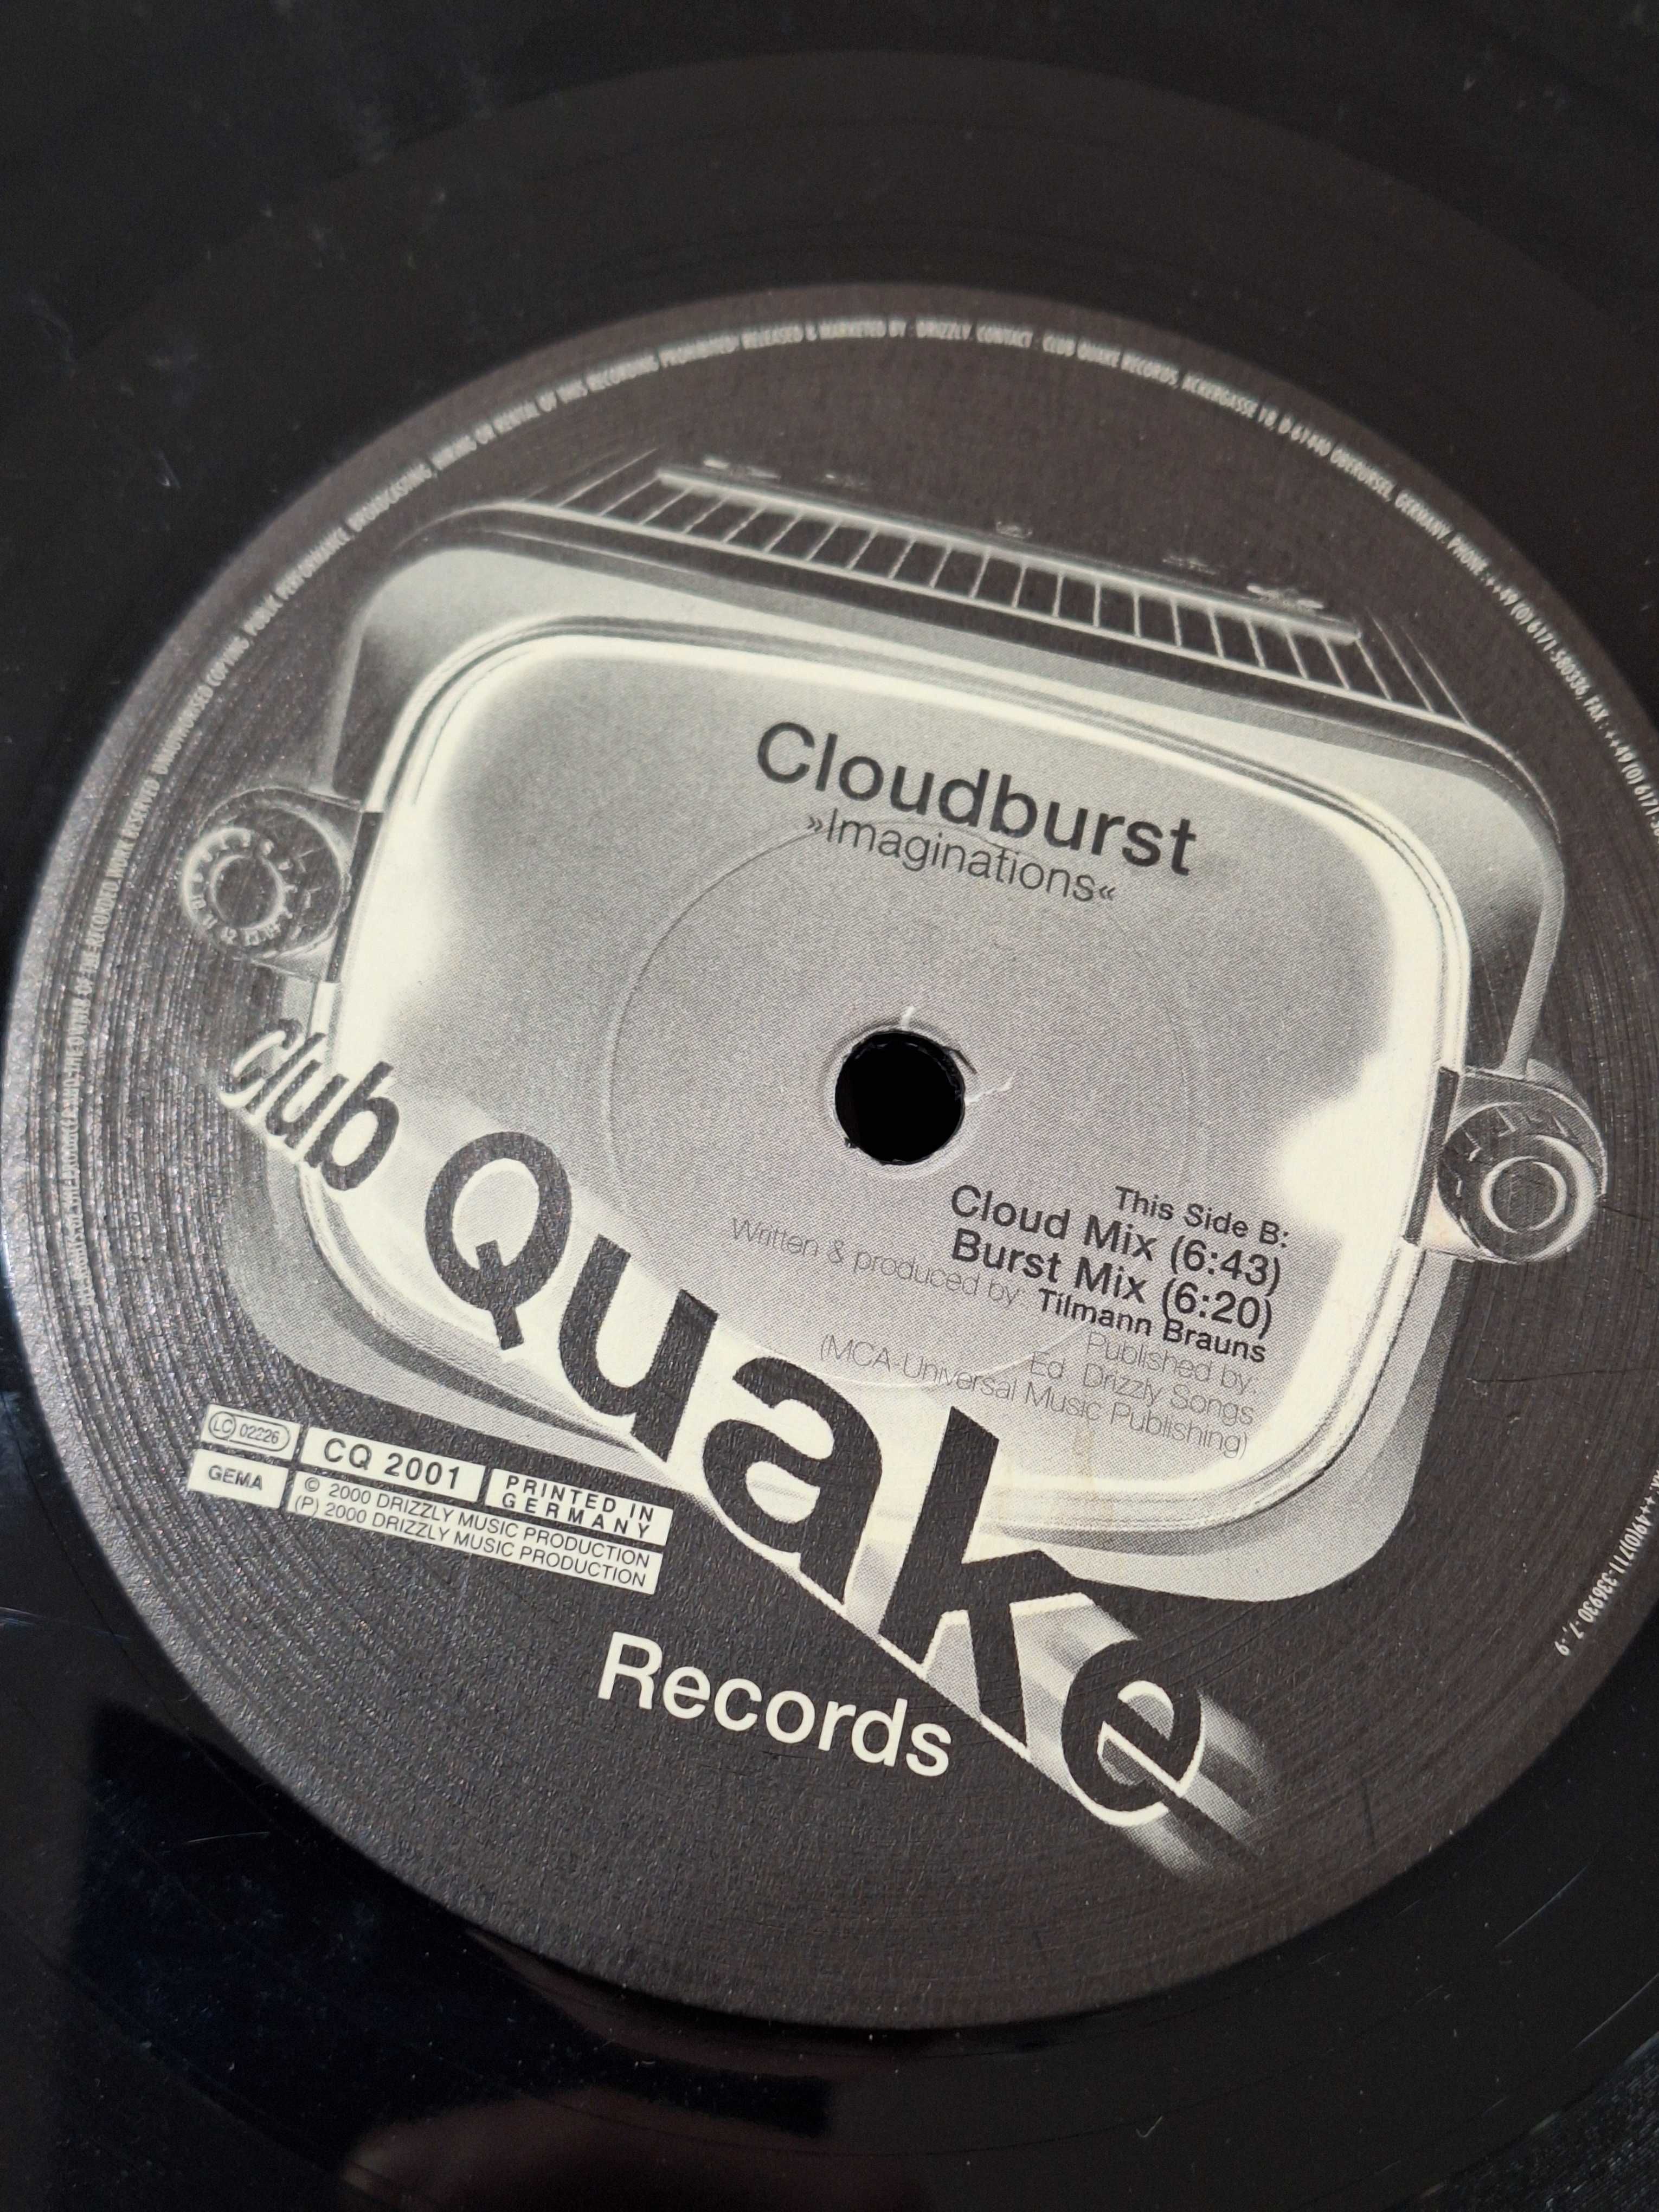 ZADBANA płyta winylowa Club Quake Records Claudburst Imaginations